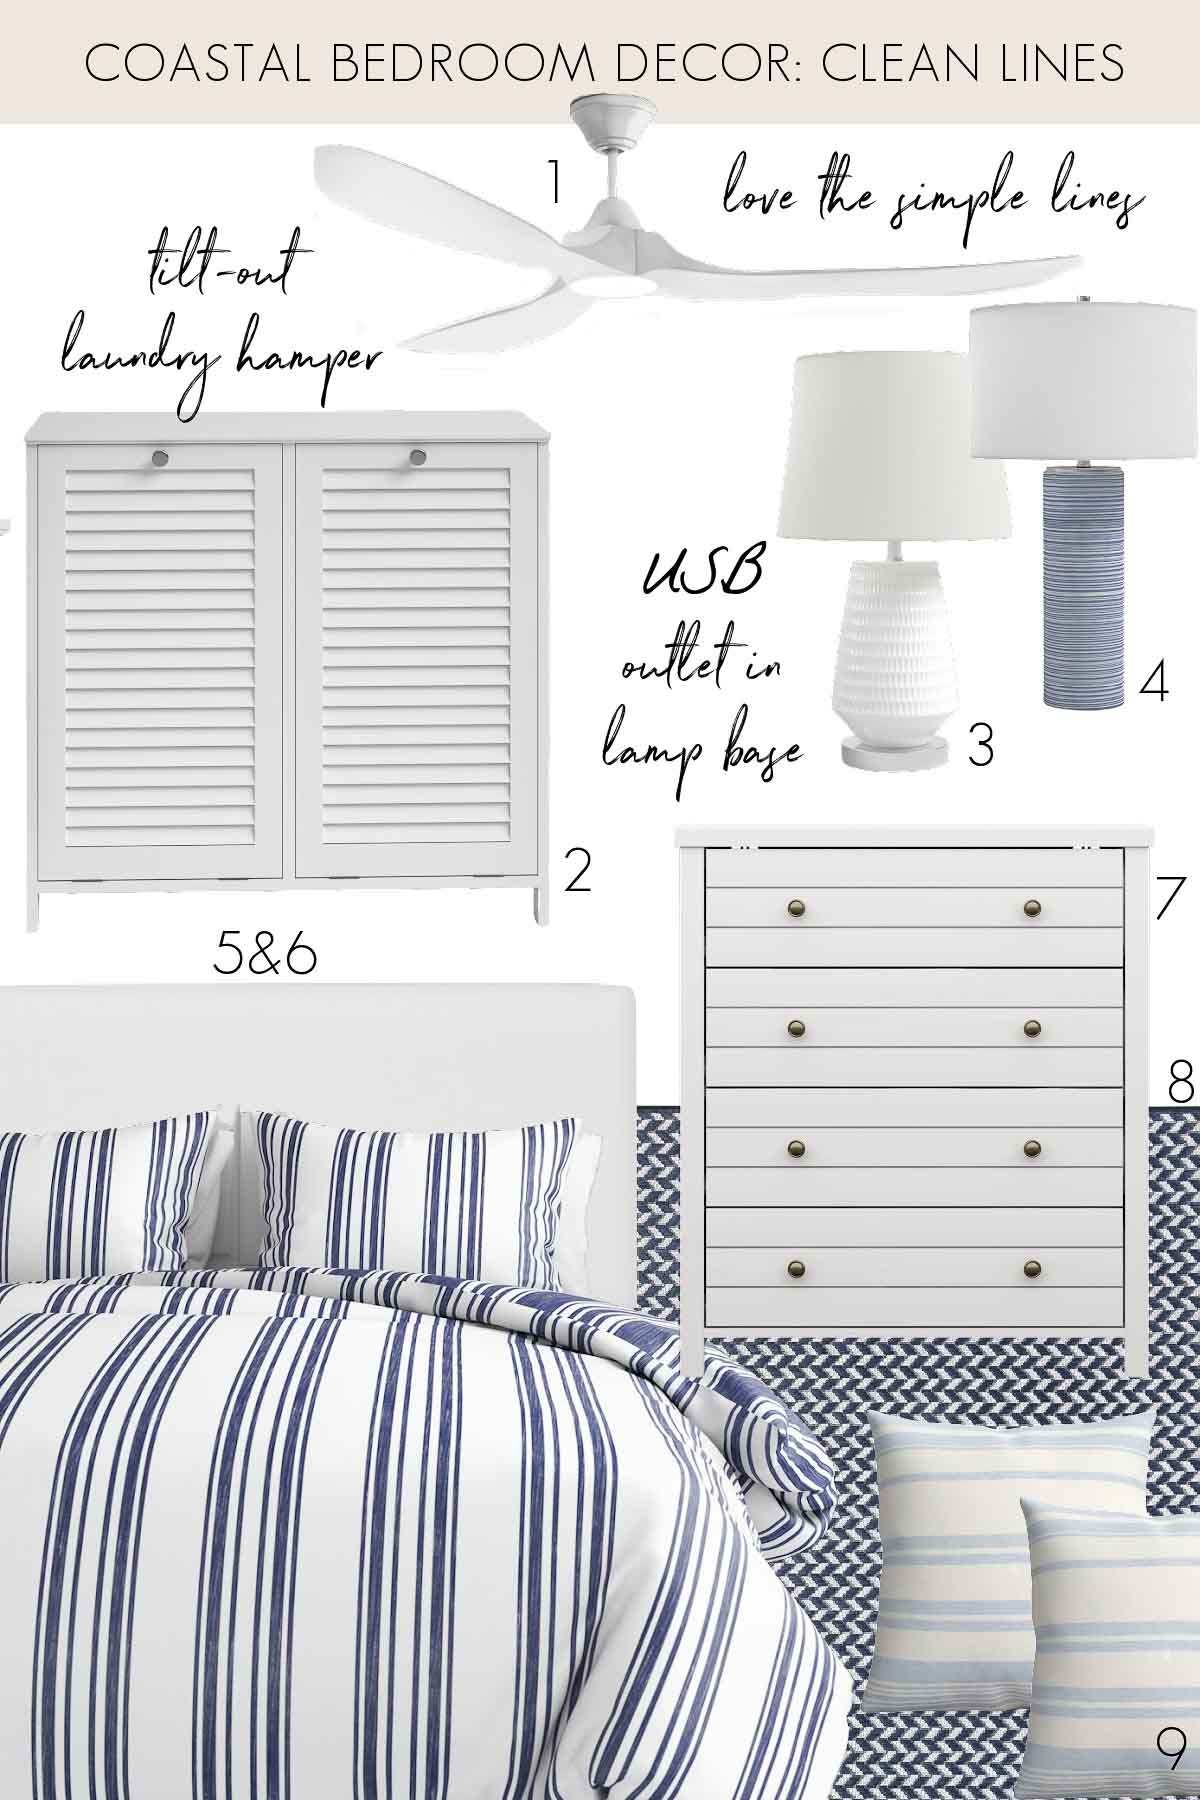 Fan, lighting, dressers, rug, bed, and bedding for coastal bedroom decor